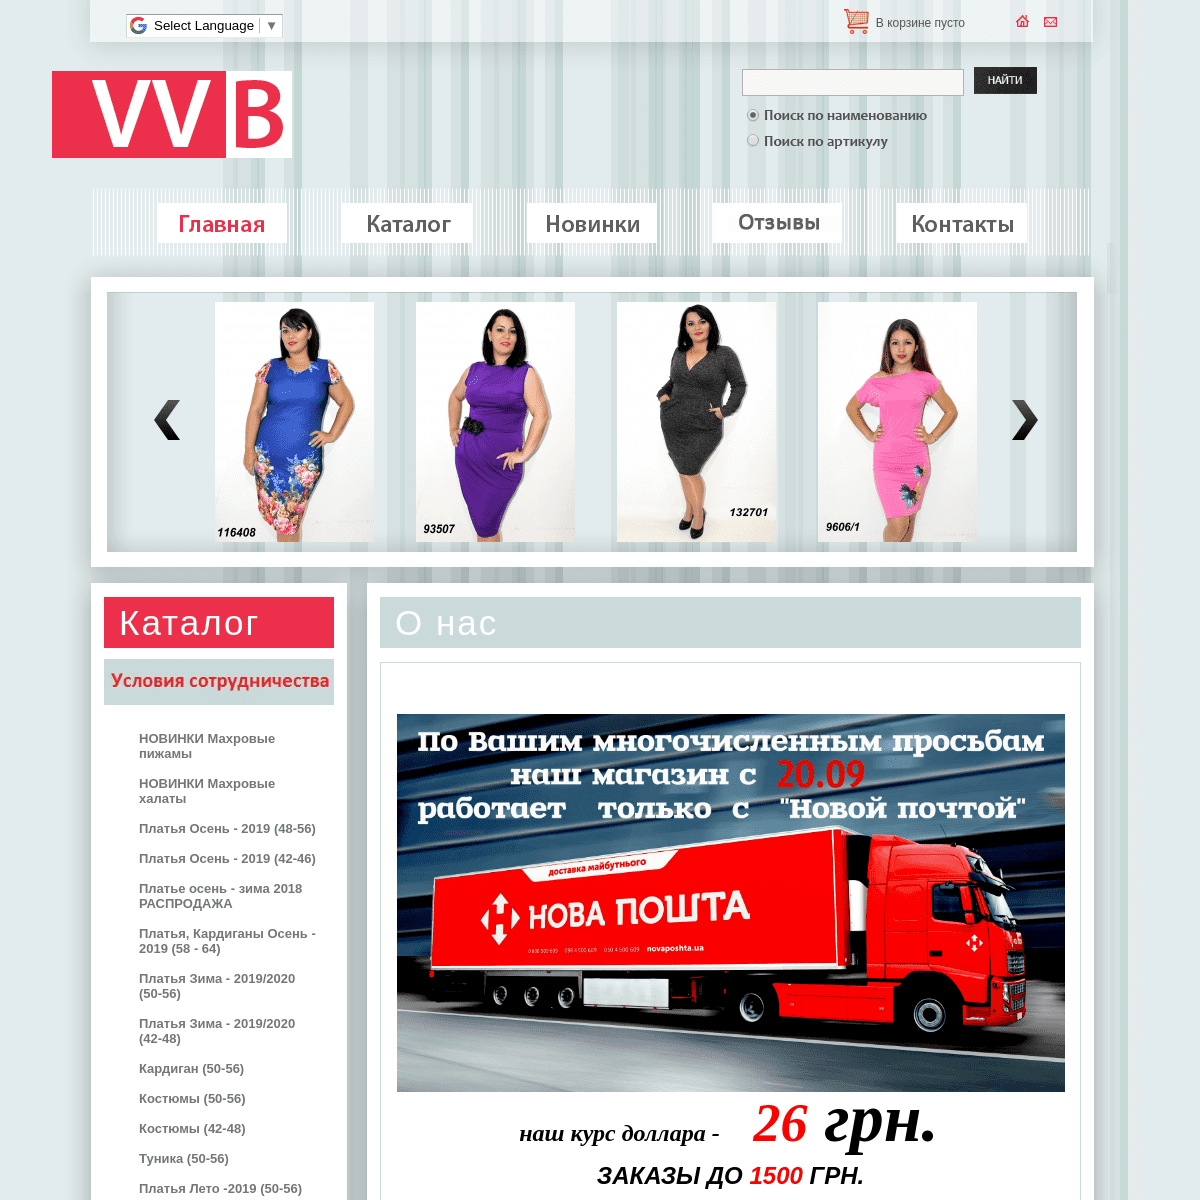 A complete backup of vvb.com.ua